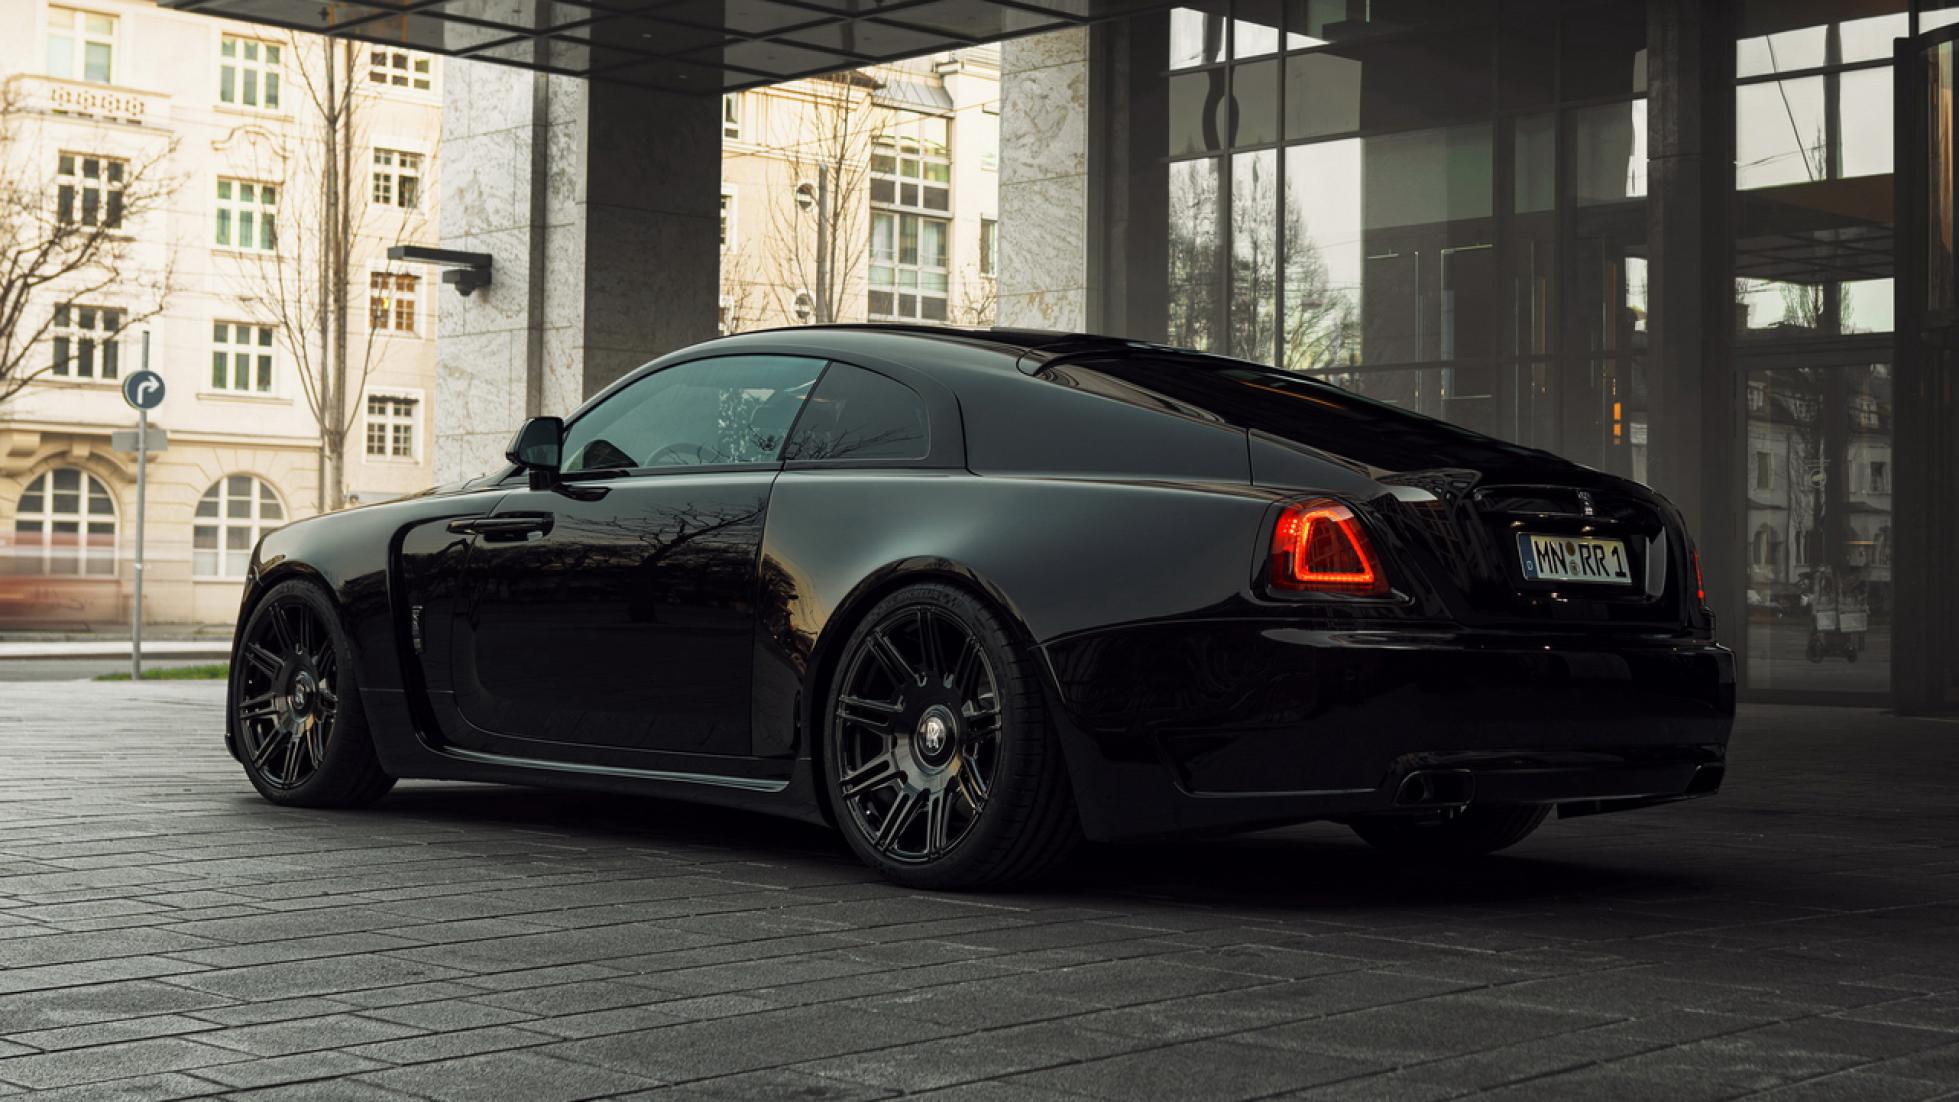 Rolls Royce Wraith rear view